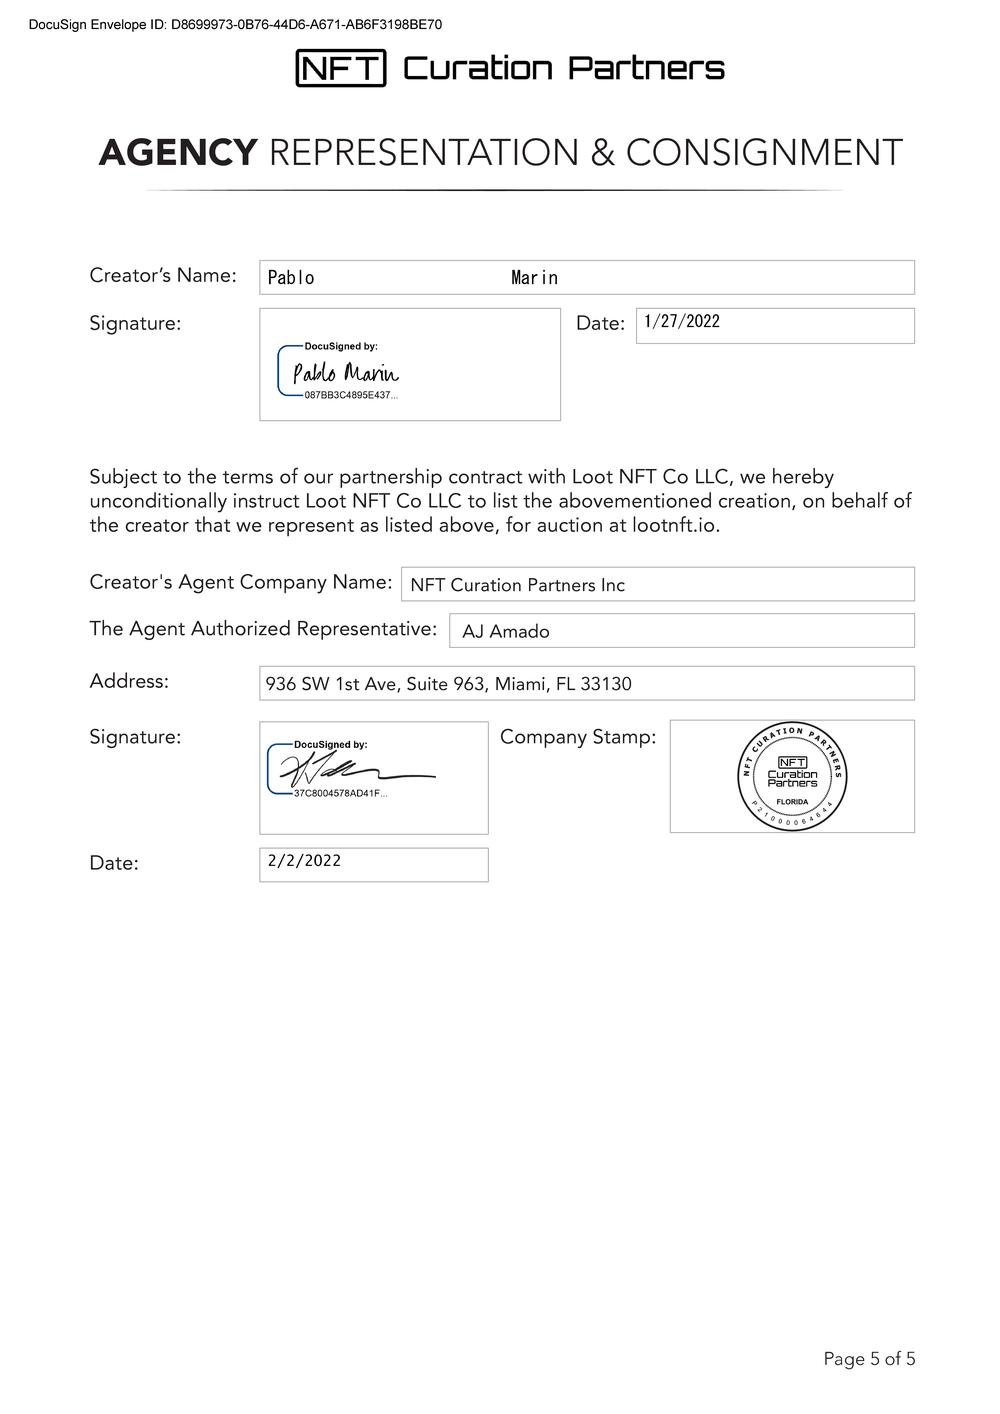 Certificate of Authenticity and Consignment - Entrada Quantanima